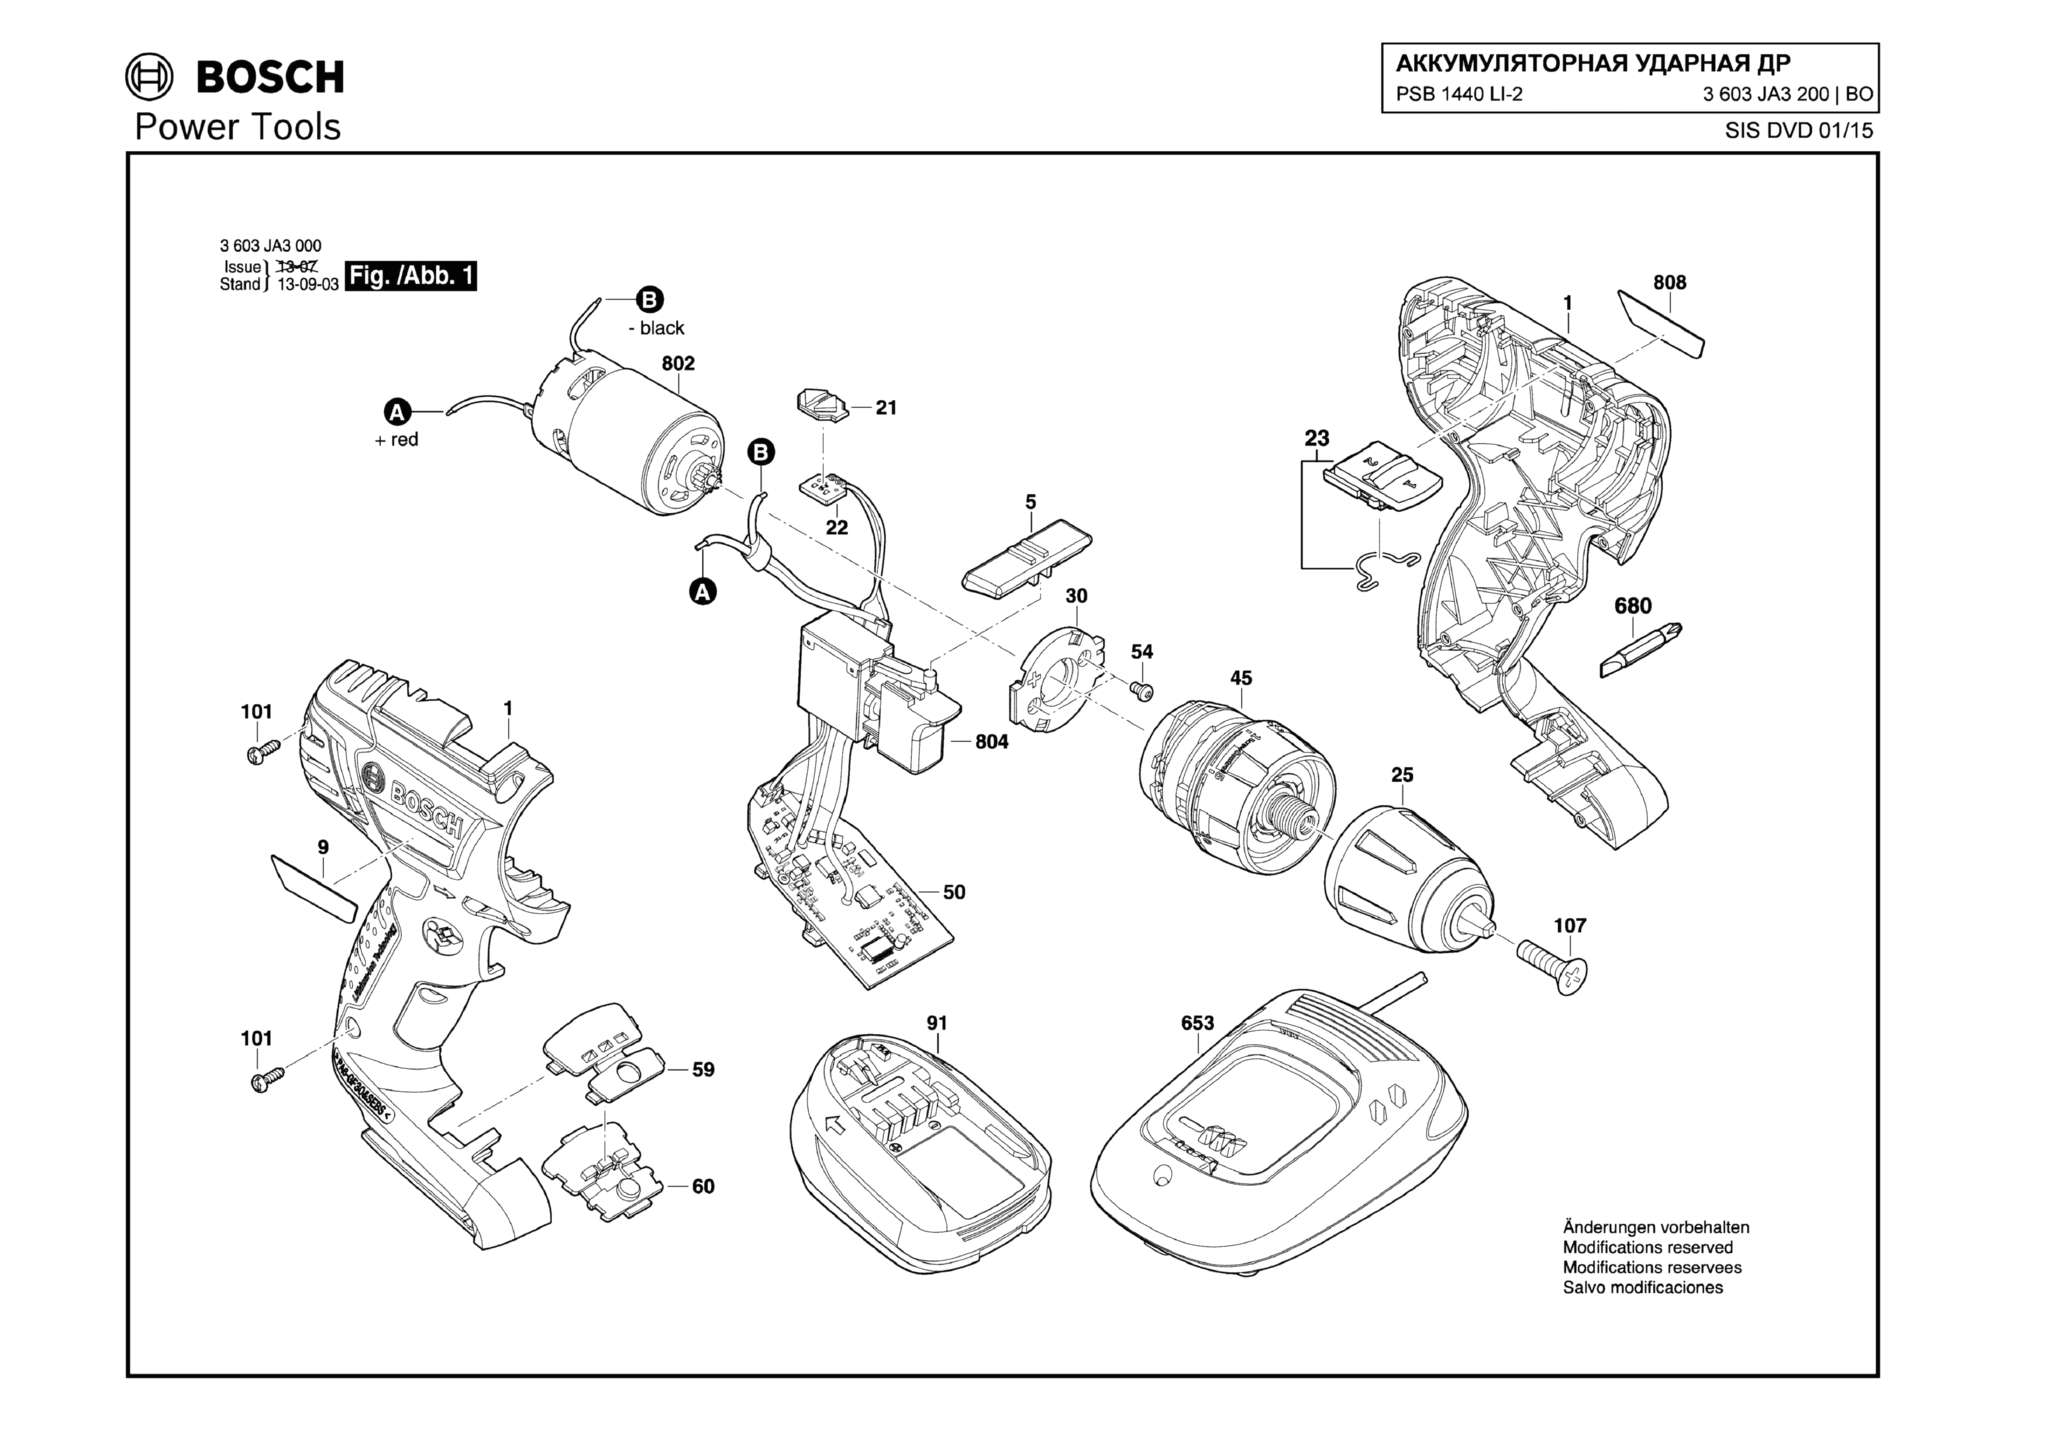 Запчасти, схема и деталировка Bosch PSB 1440 LI-2 (ТИП 3603JA3200)